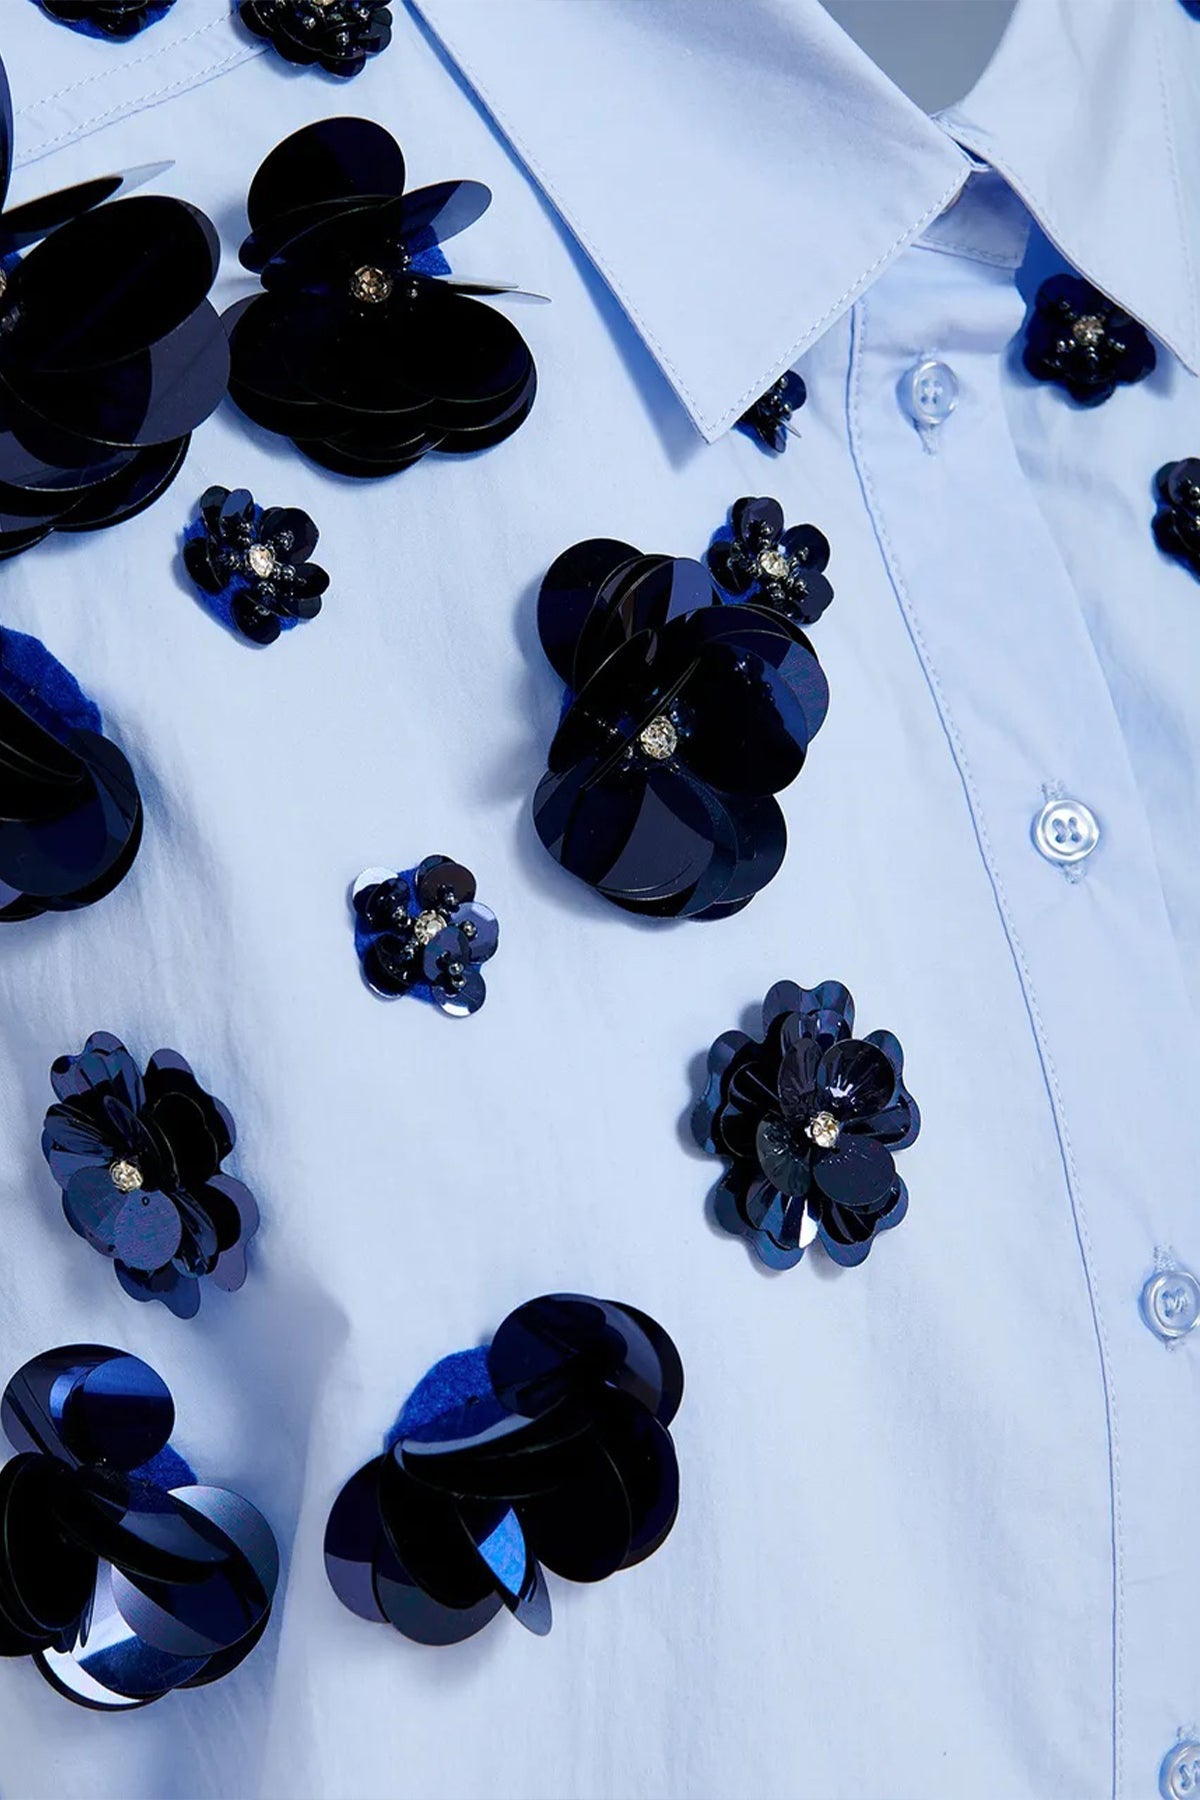 Fight Sleeveless Cotton Shirt in Dark Blue - shop - olivia.com